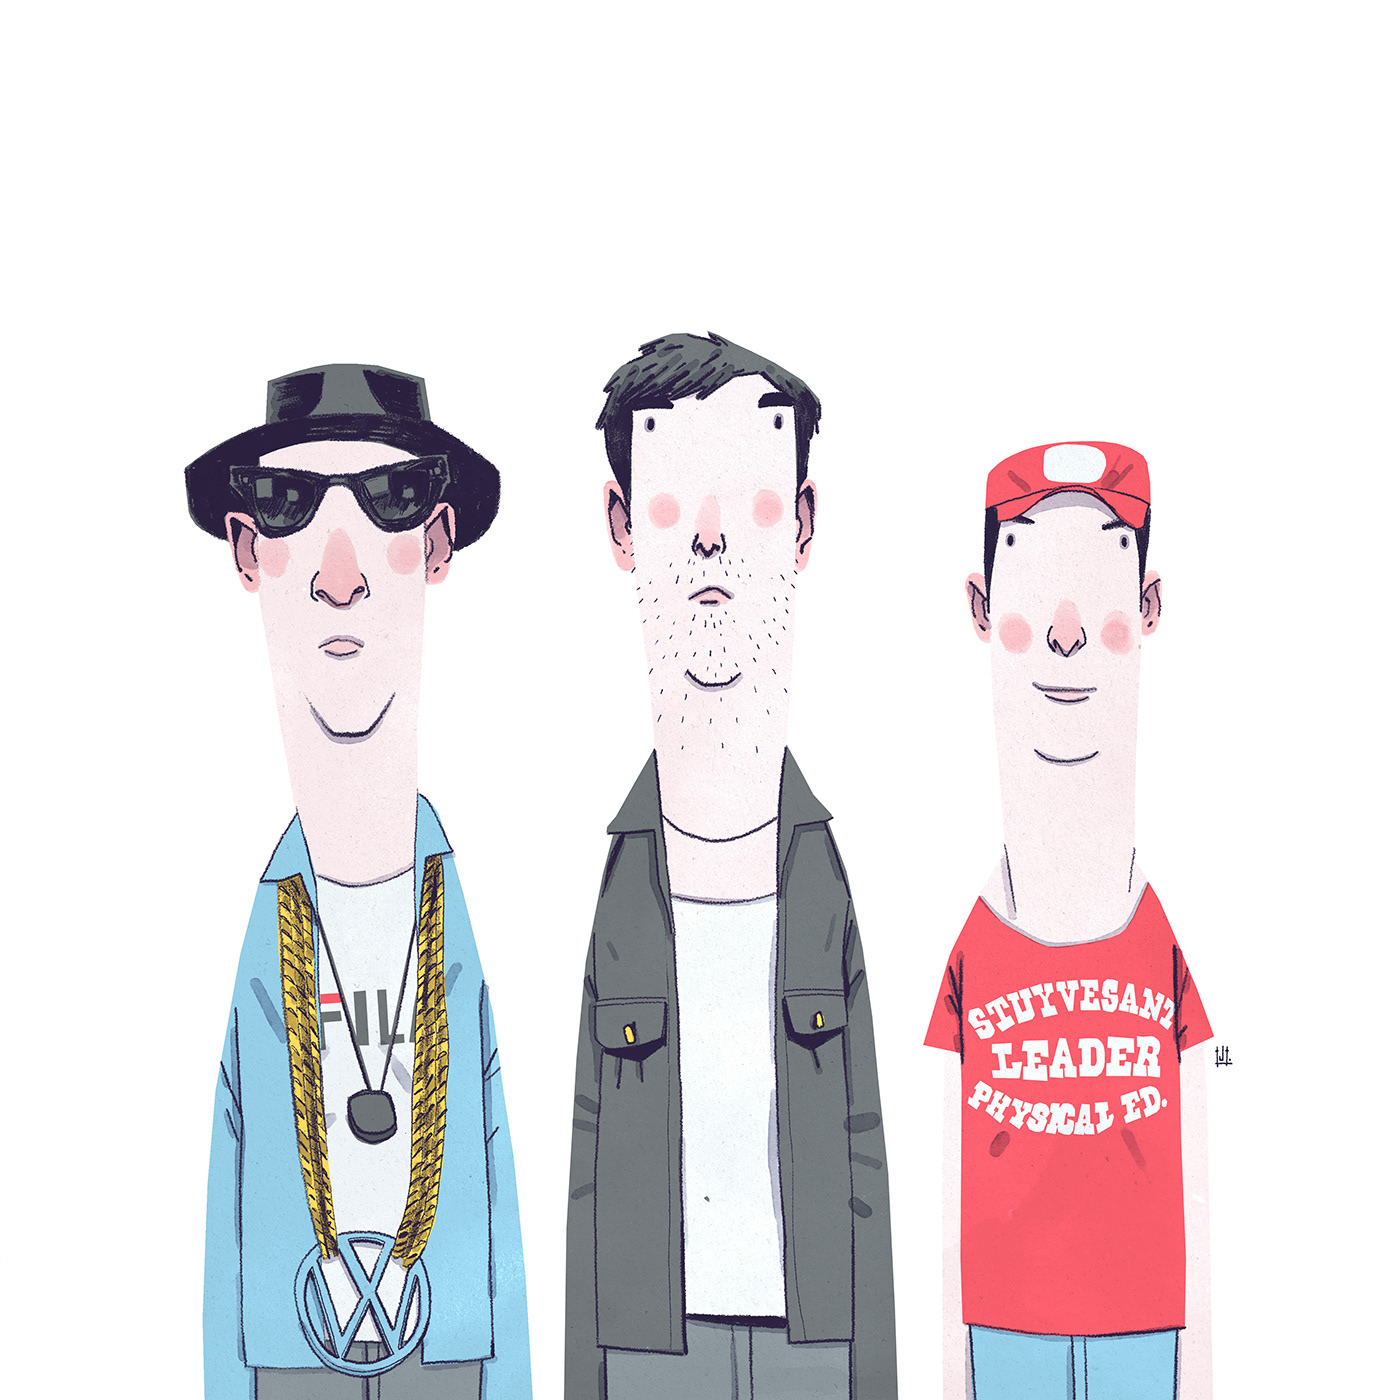 Beastie Boys Brooklyn childrens illustration hip hop music New York pop culture portrait rap rock